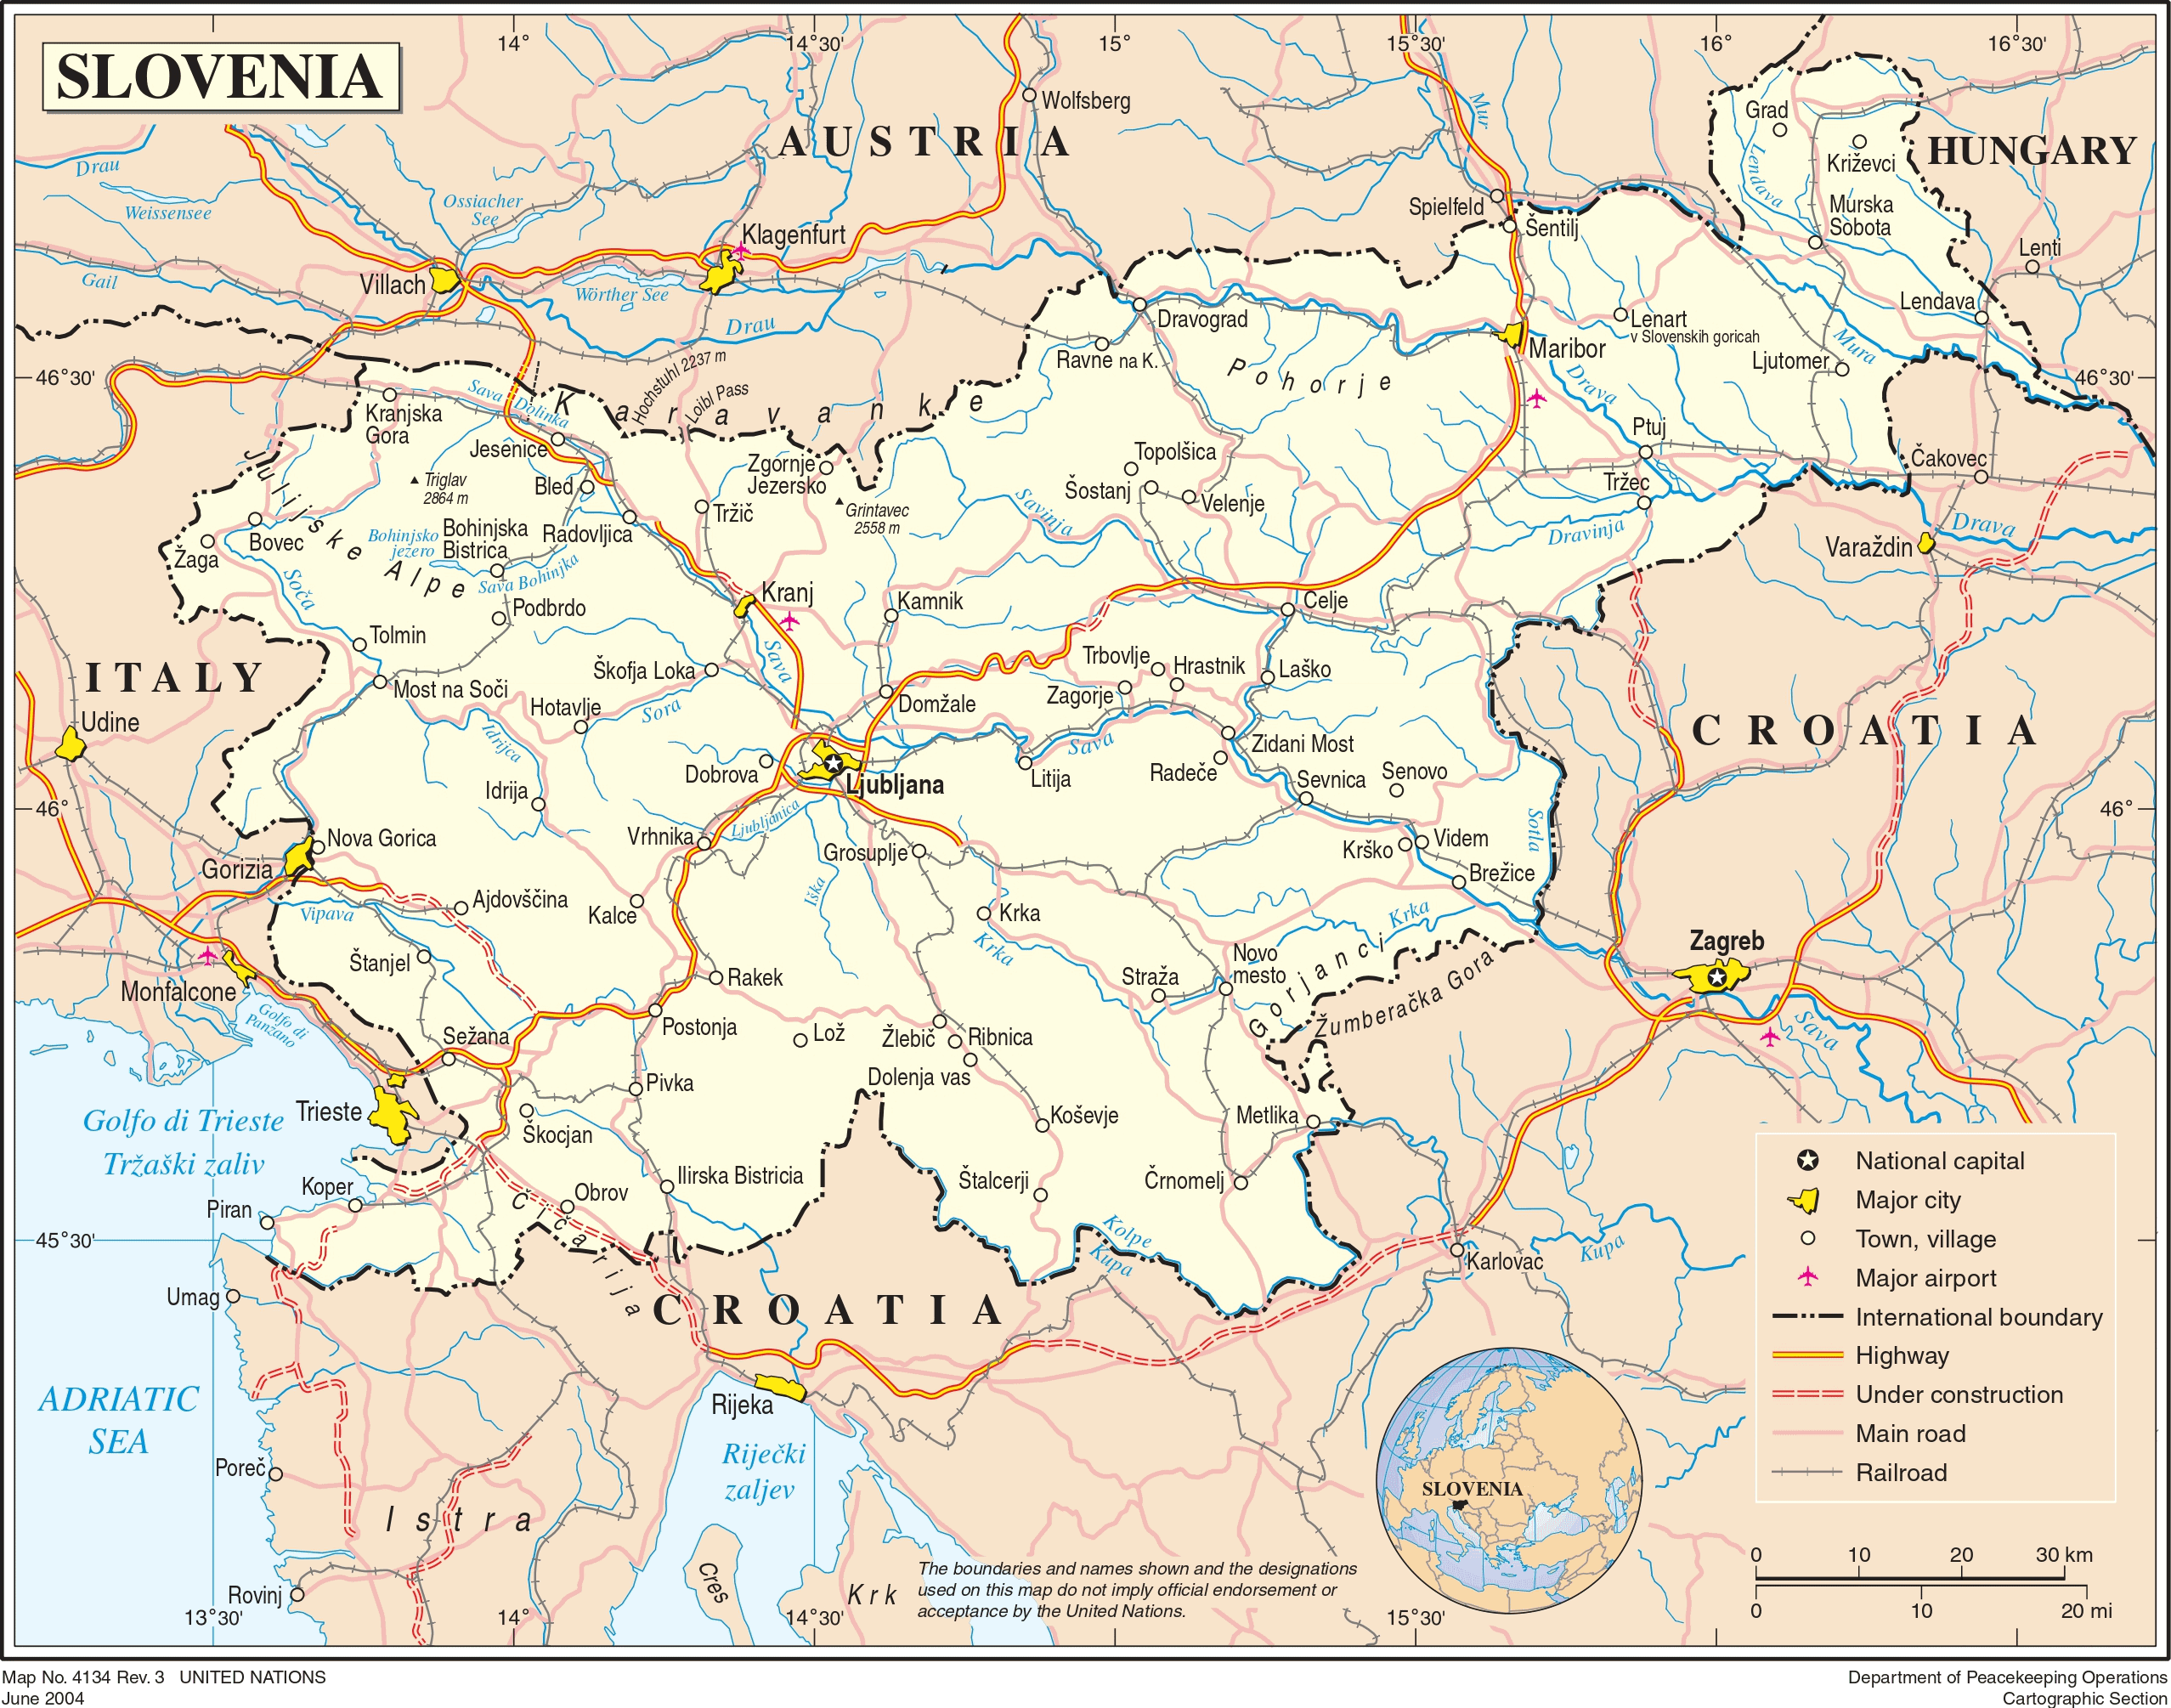 map Slovenia